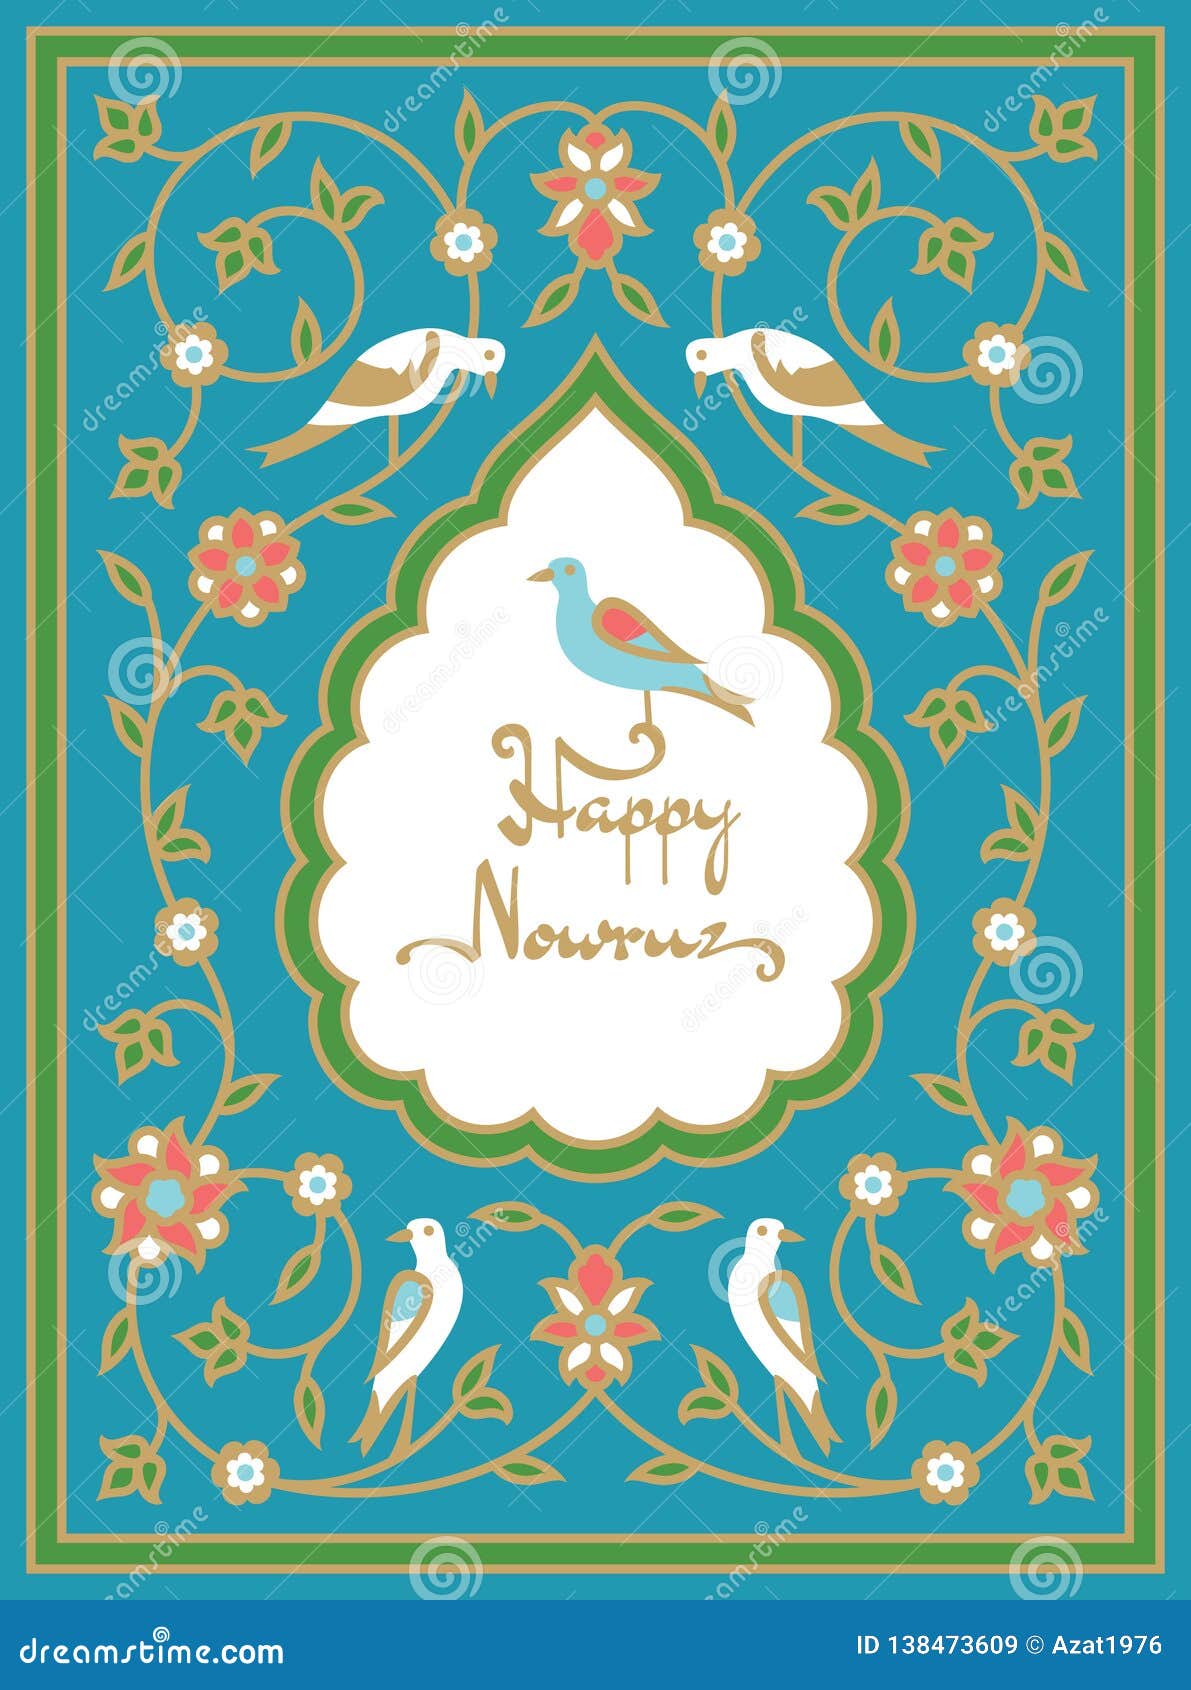 nowruz greeting card